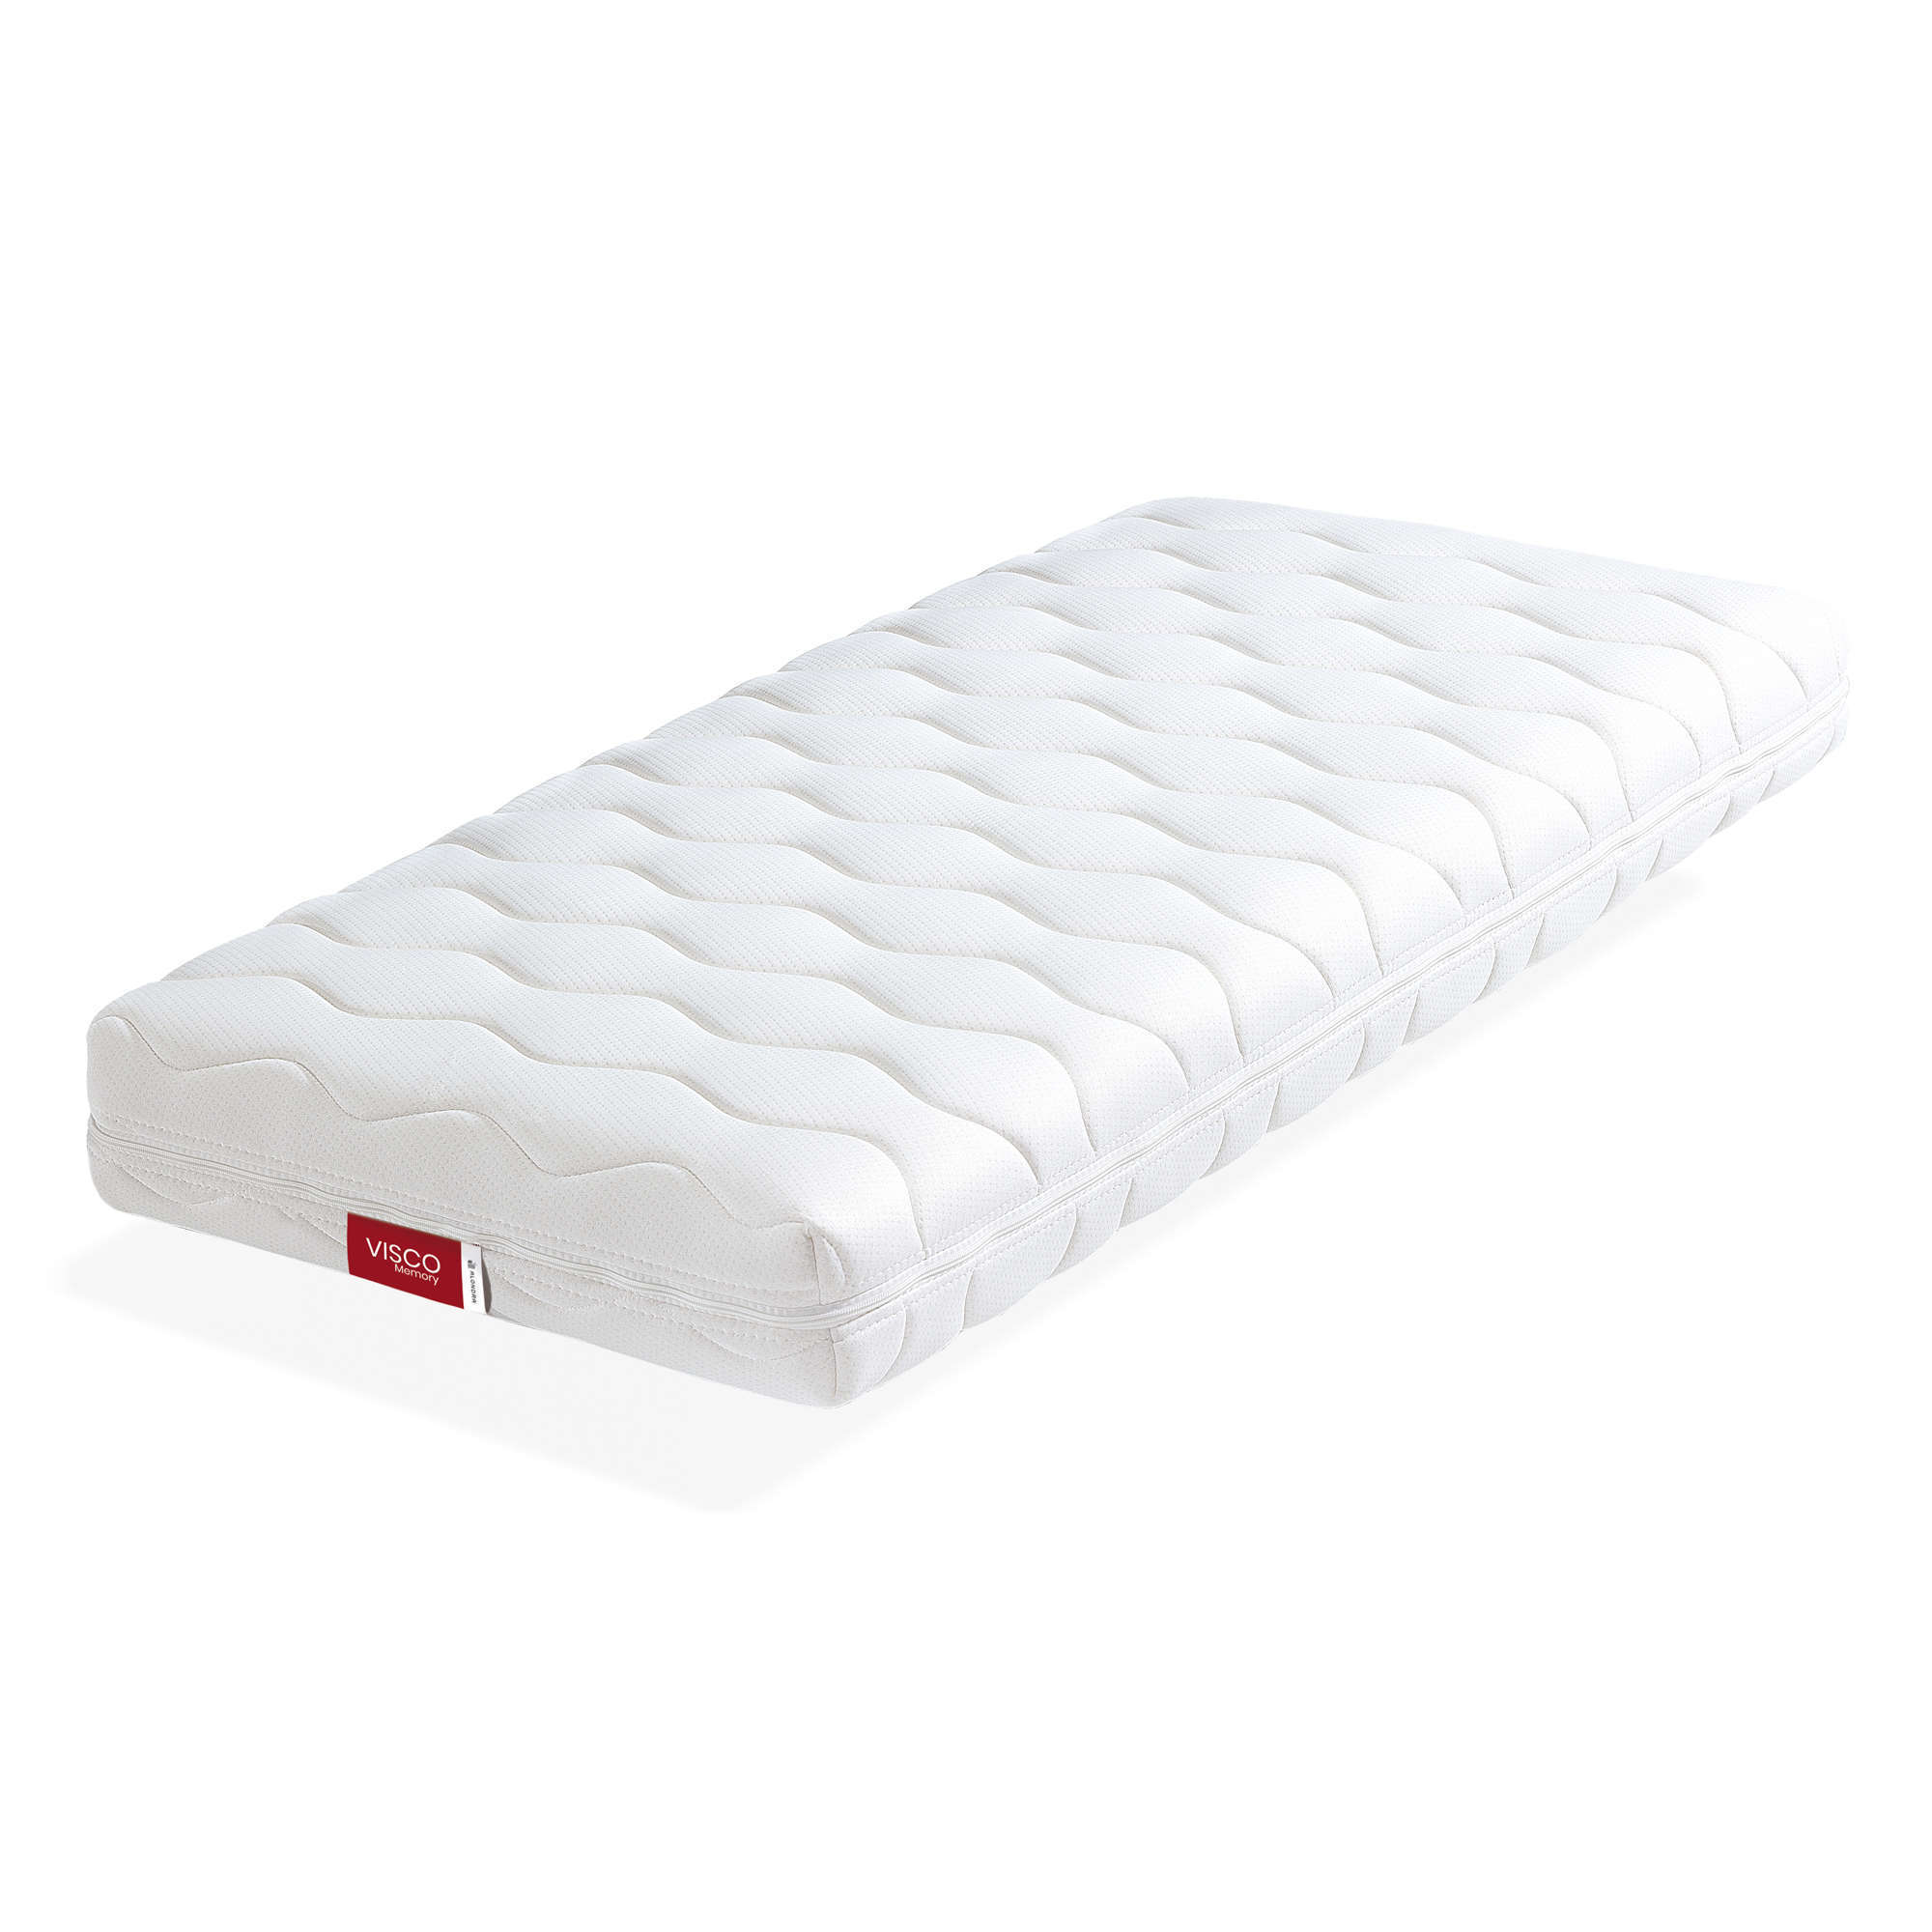 Memory foam mattress for cot 70x140cm